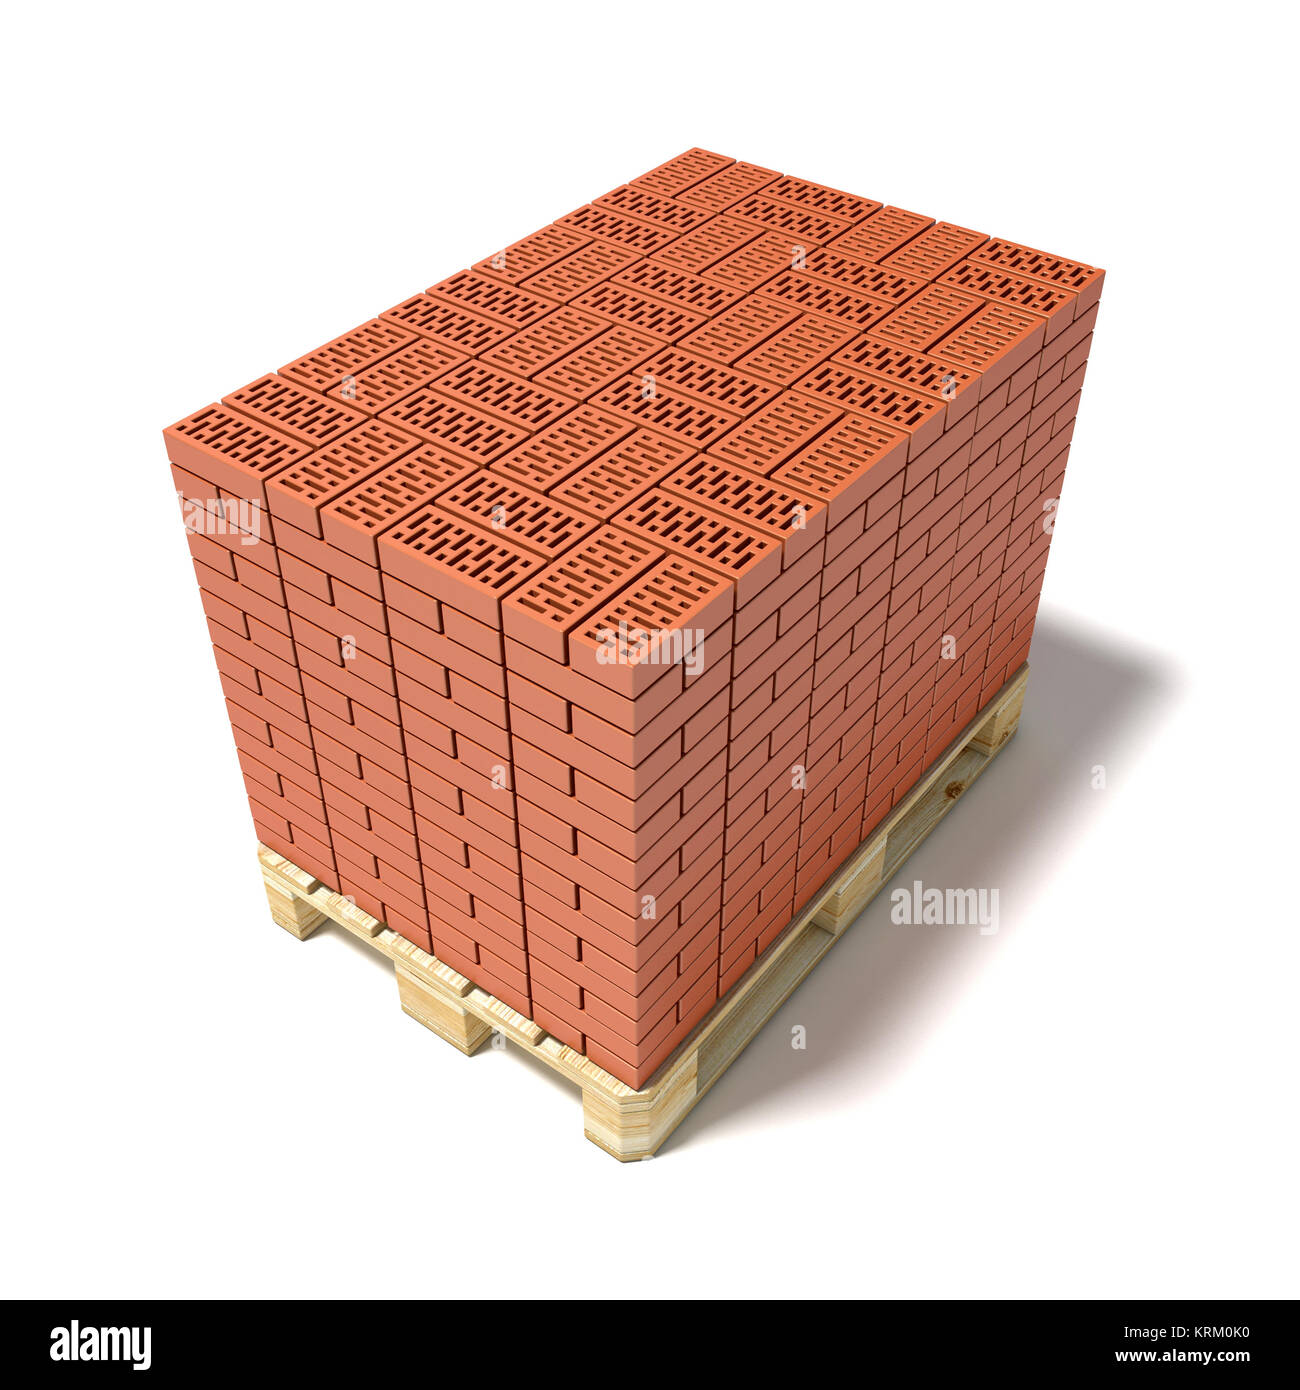 Euro pallet full of ceramic bricks. 3D Stock Photo